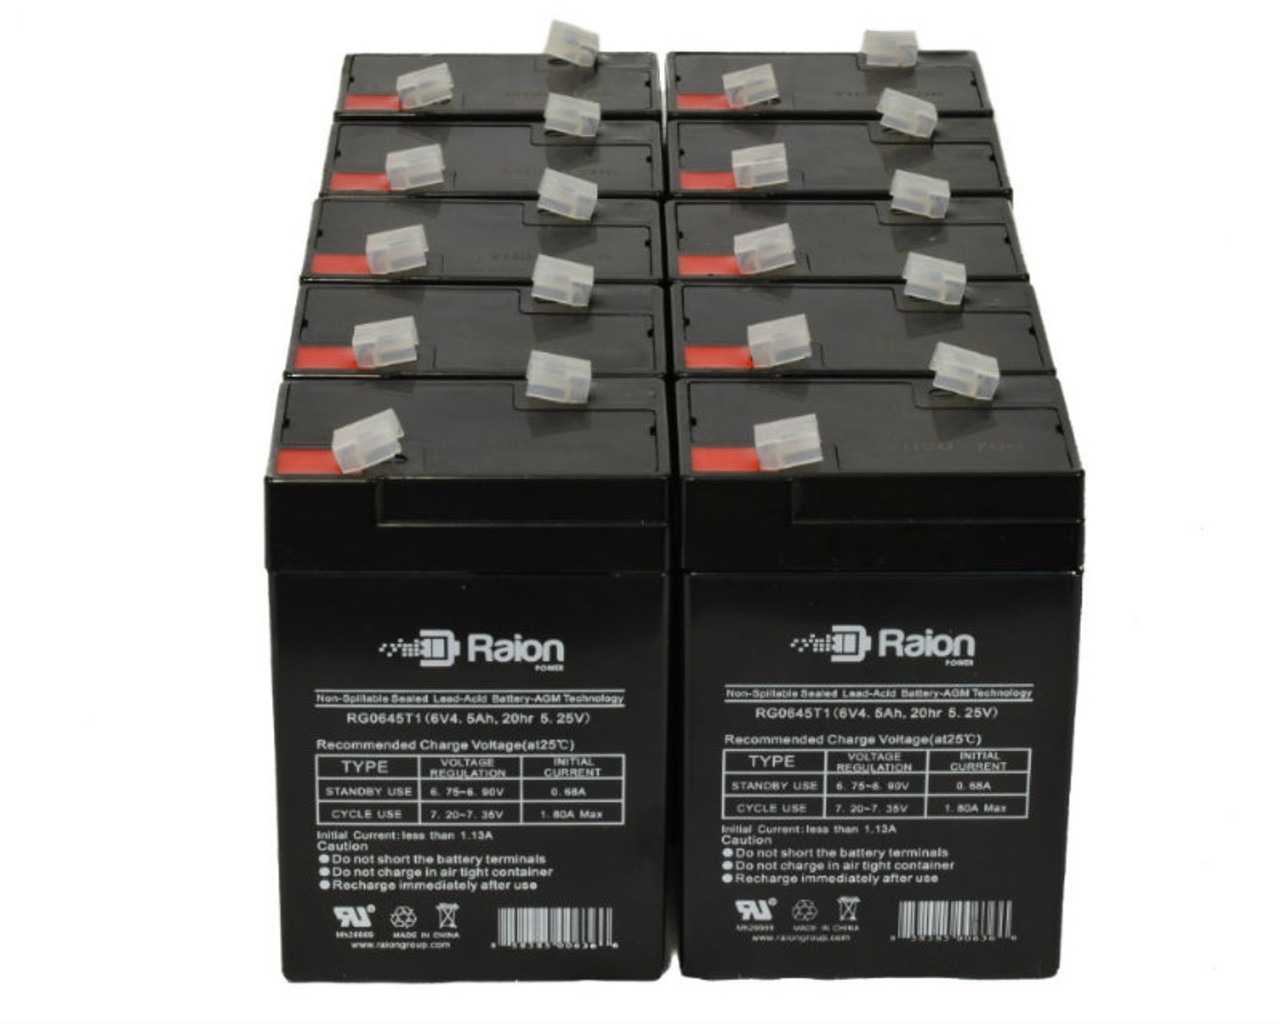 Raion Power 6V 4.5Ah Replacement Emergency Light Battery for JohnLite 8921NS - 10 Pack